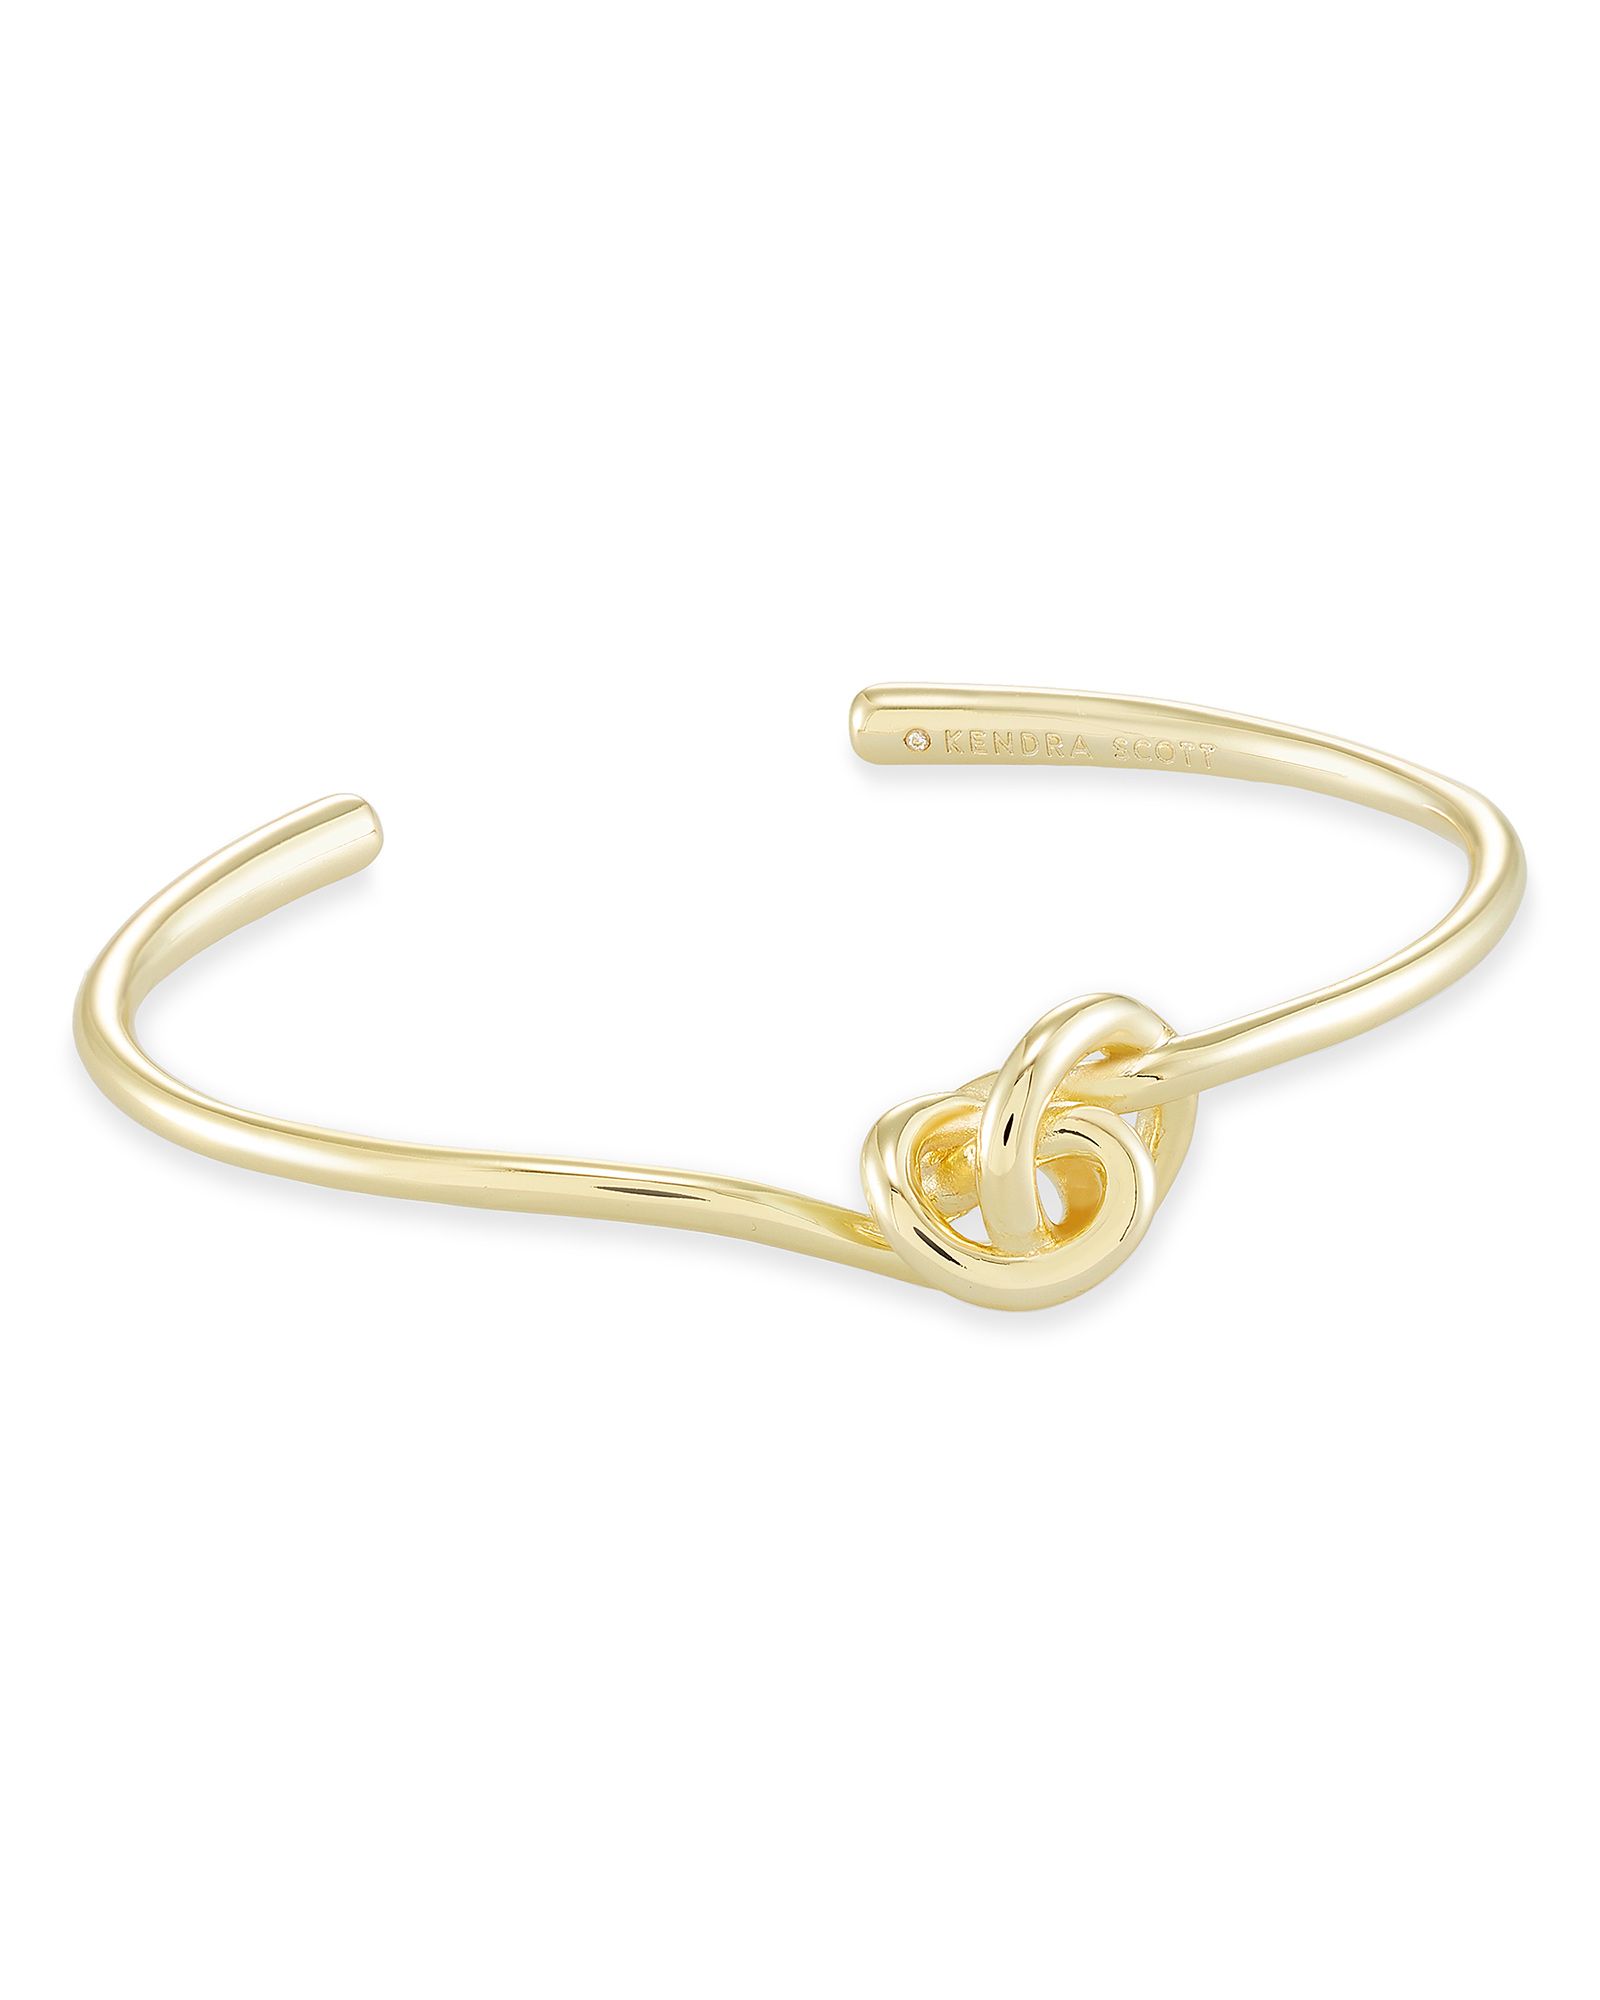 Presleigh Cuff Bracelet in Gold | Kendra Scott